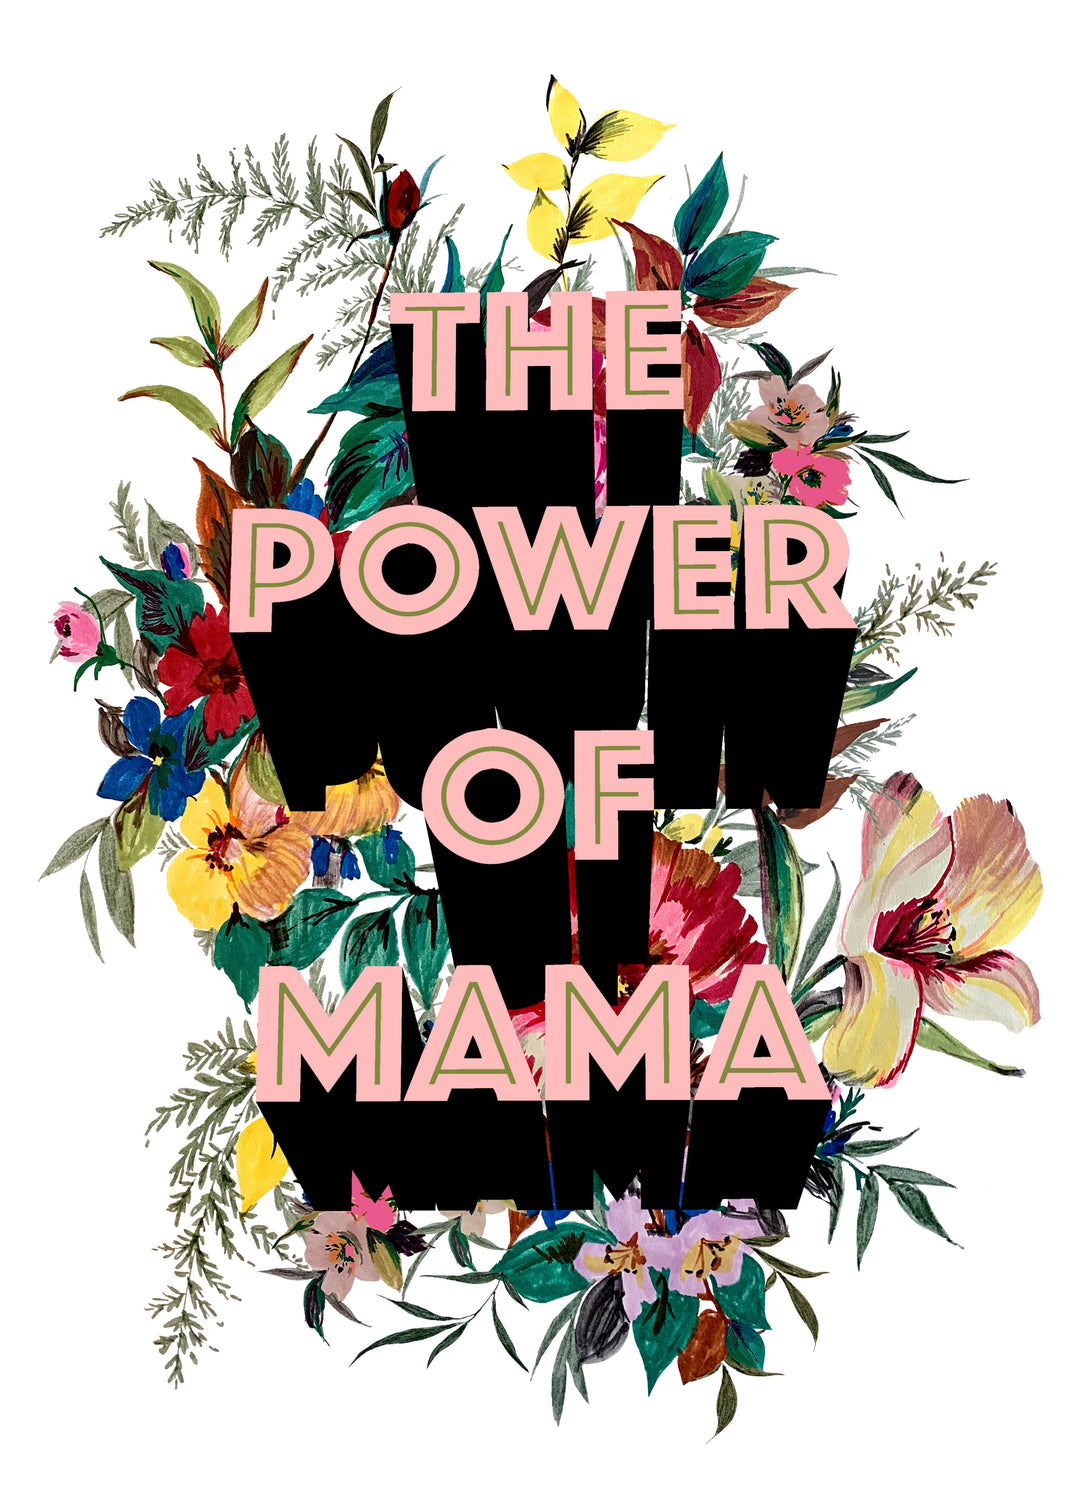 The Power Of Mama Giclée Print